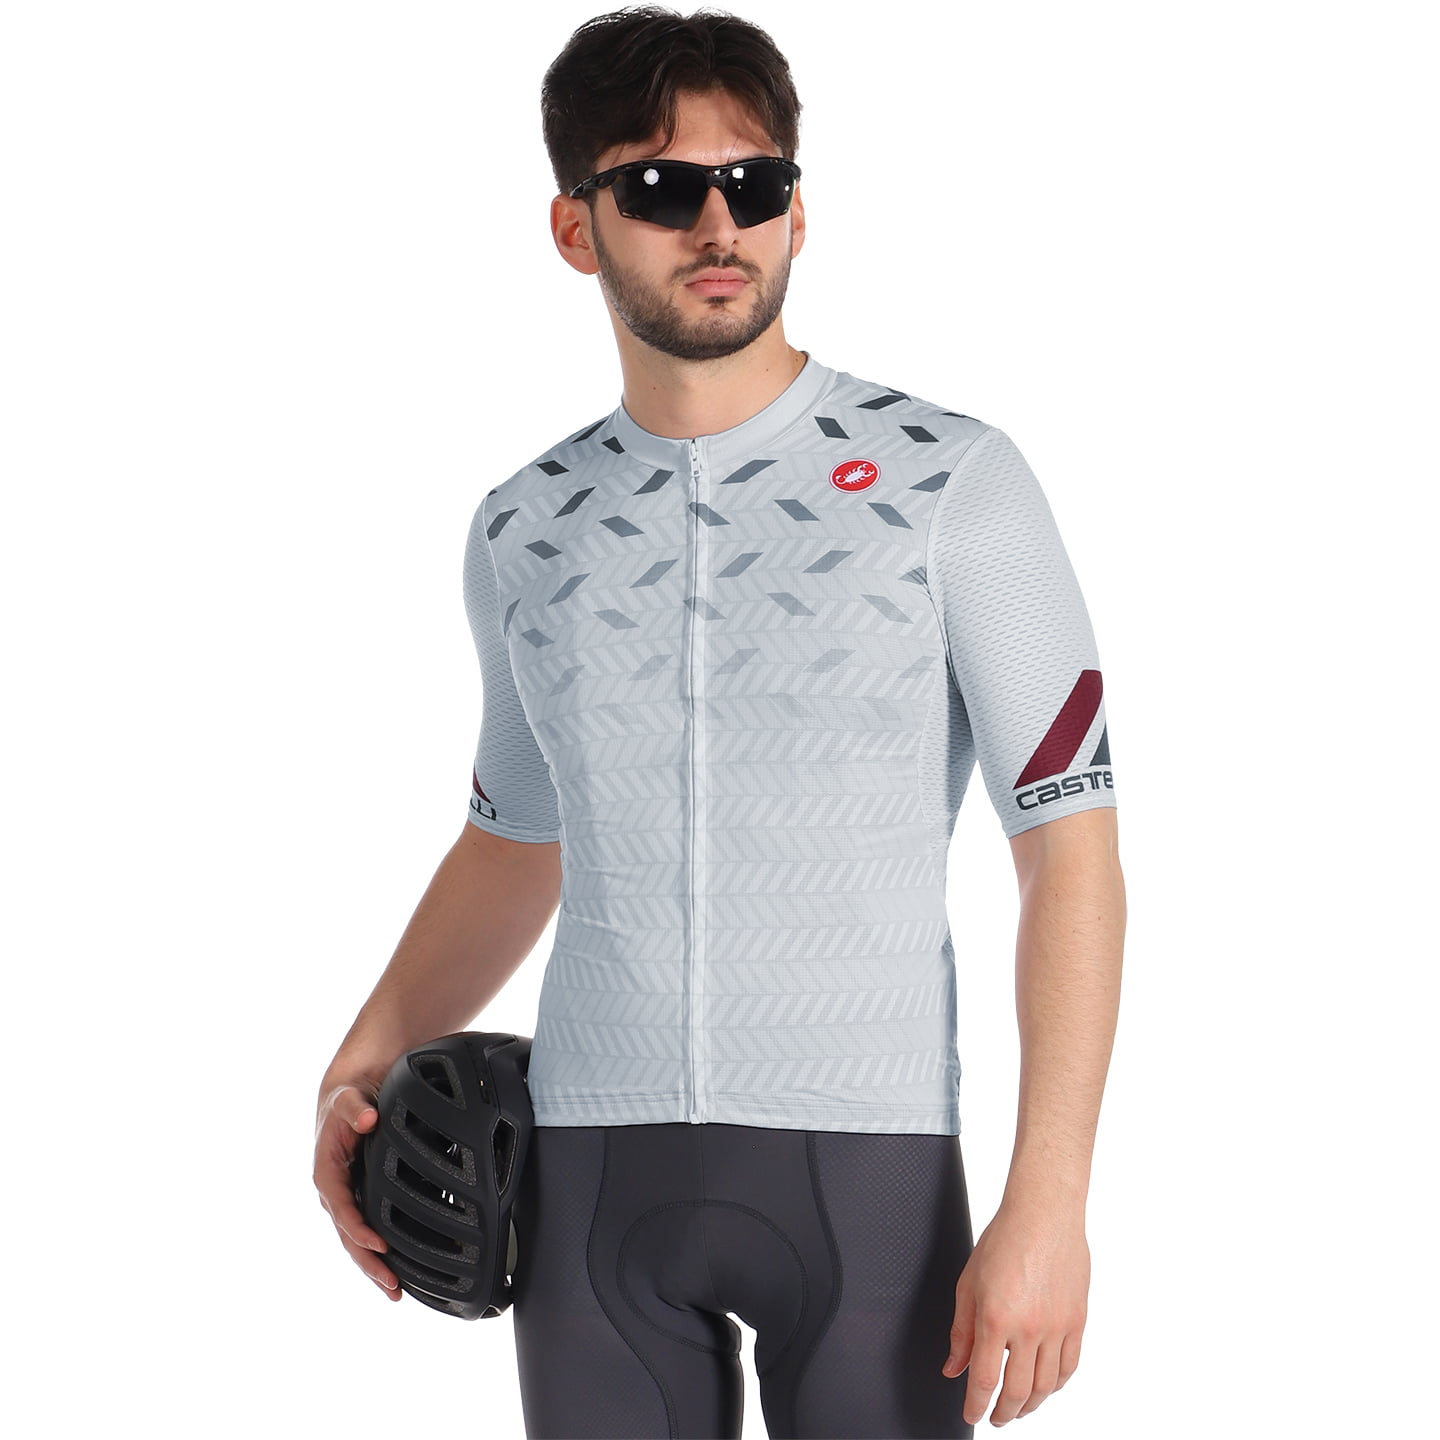 CASTELLI Avanti 2 Short Sleeve Jersey Short Sleeve Jersey, for men, size 3XL, Cycling jersey, Cycle clothing